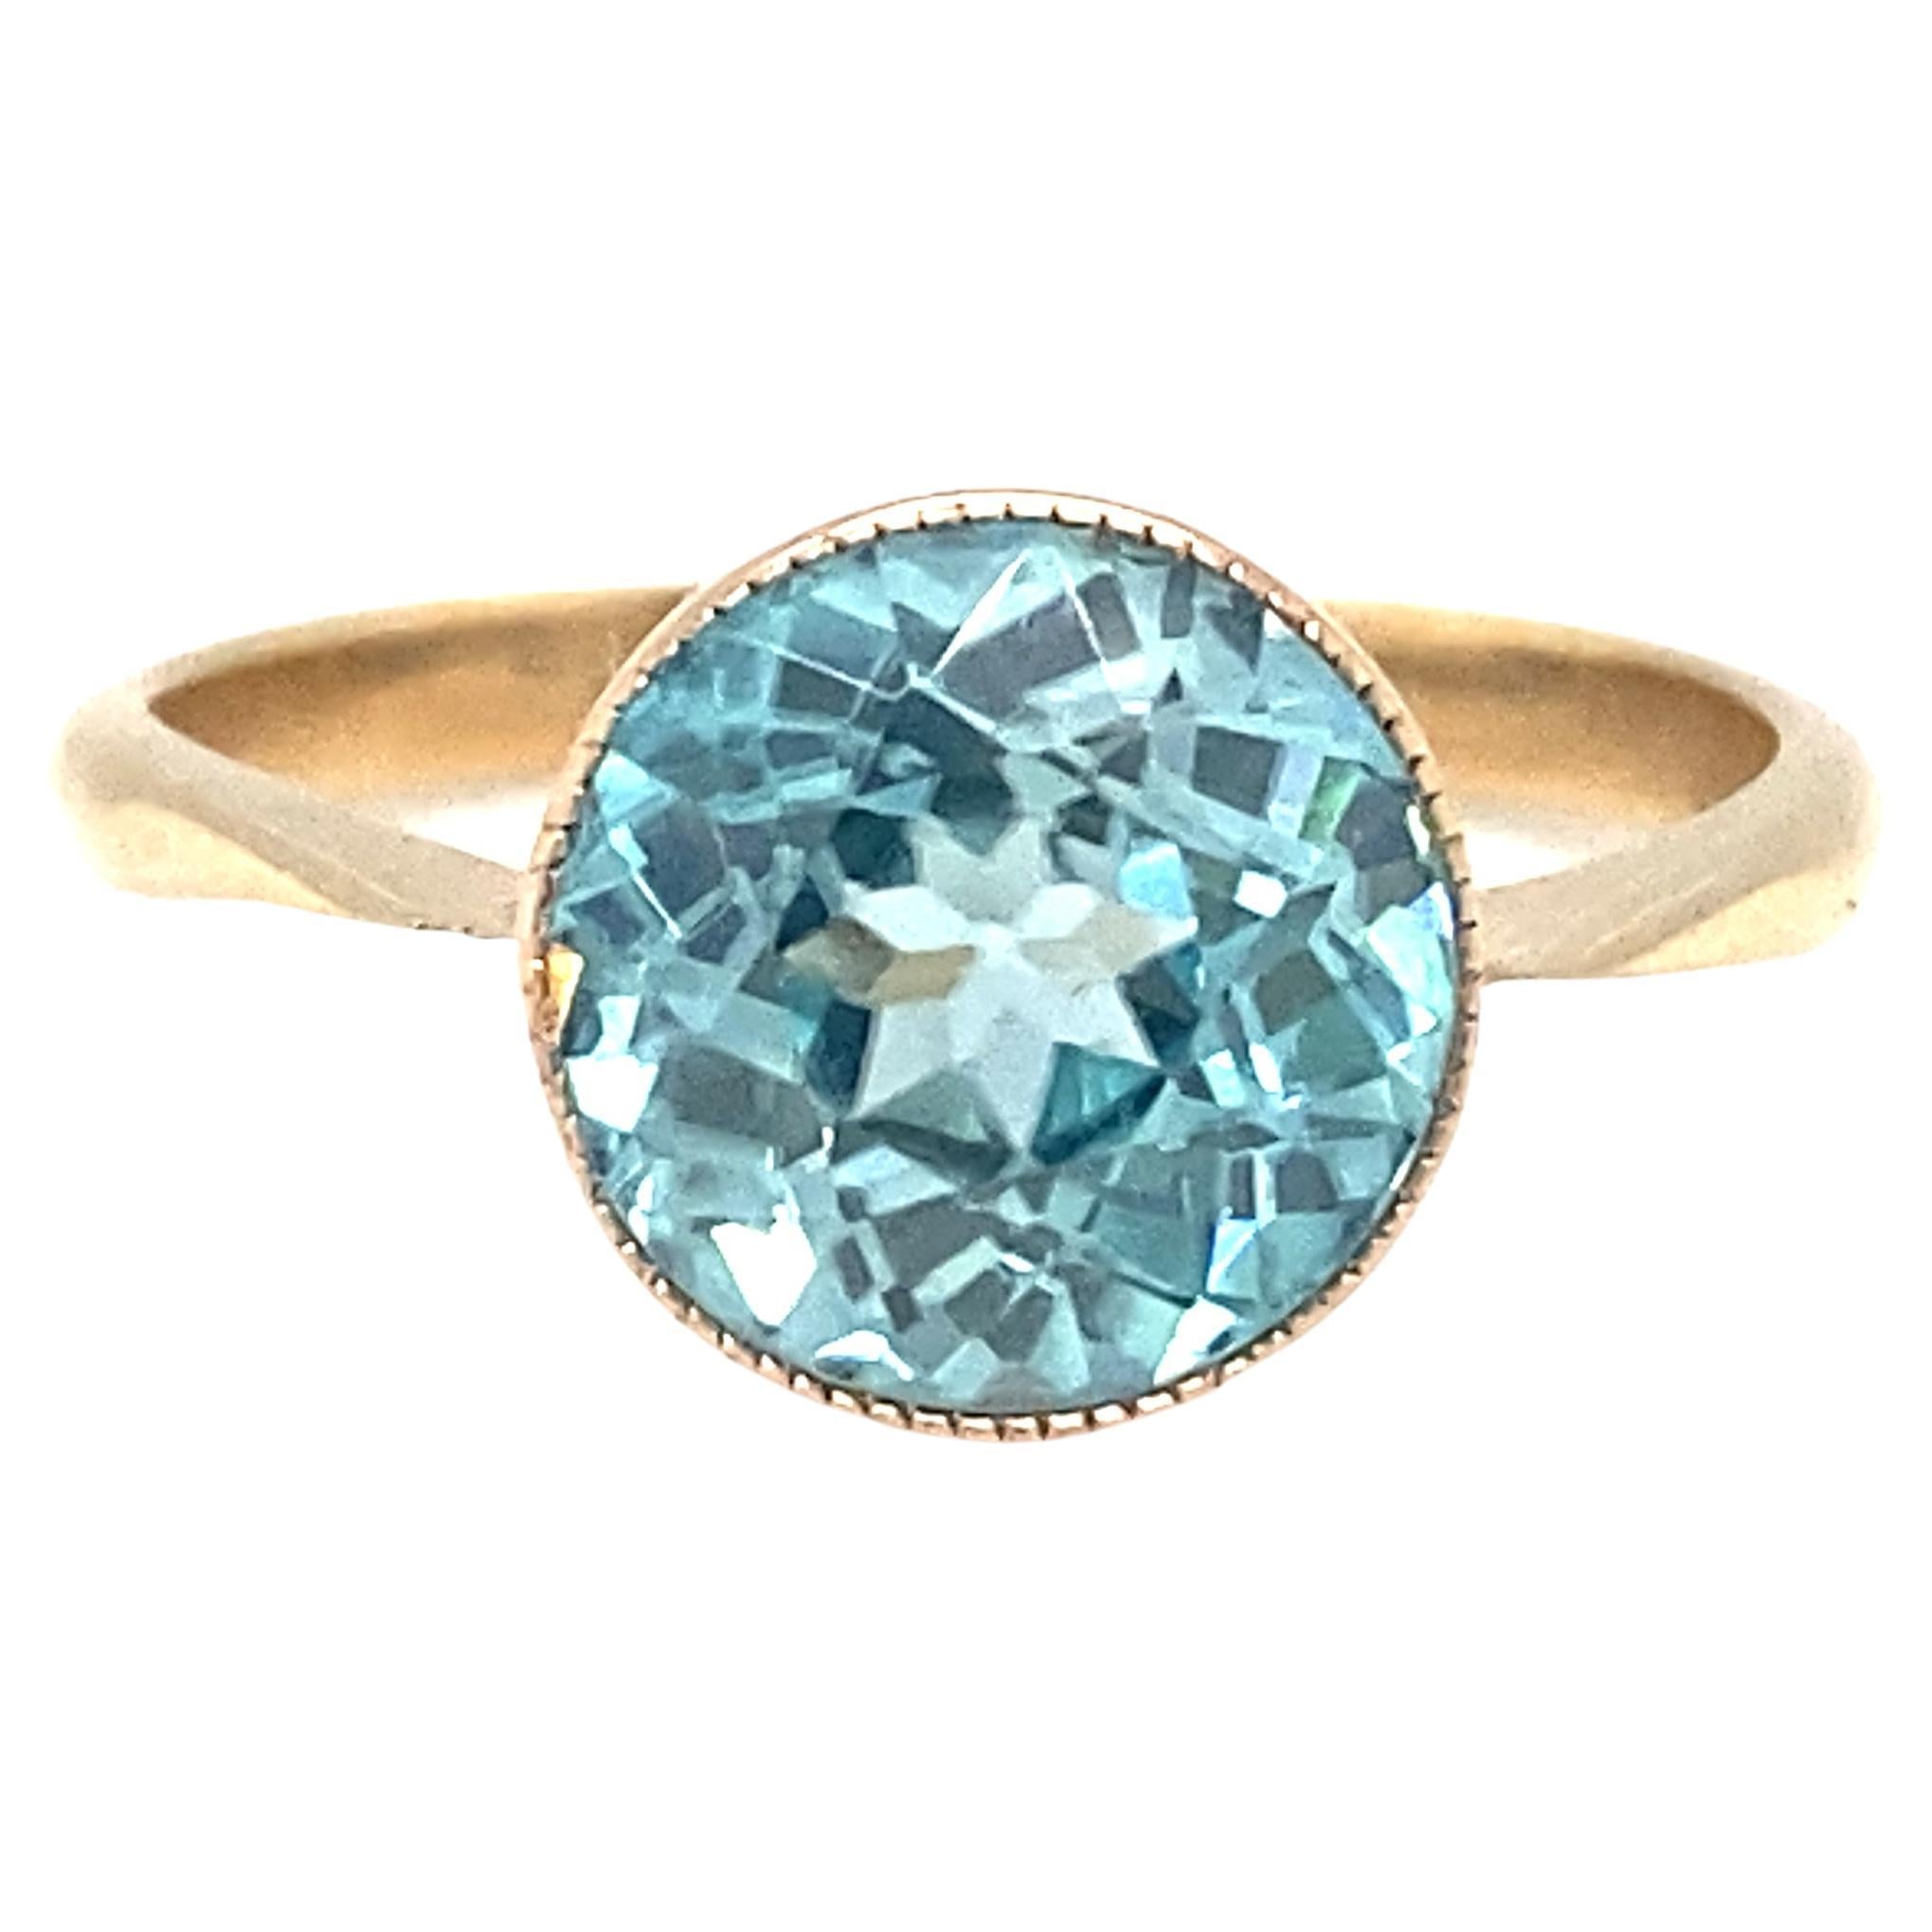 Circa 1890s Victorian 2 Carat Blue Zircon Solitaire Ring in 9 Karat Gold For Sale